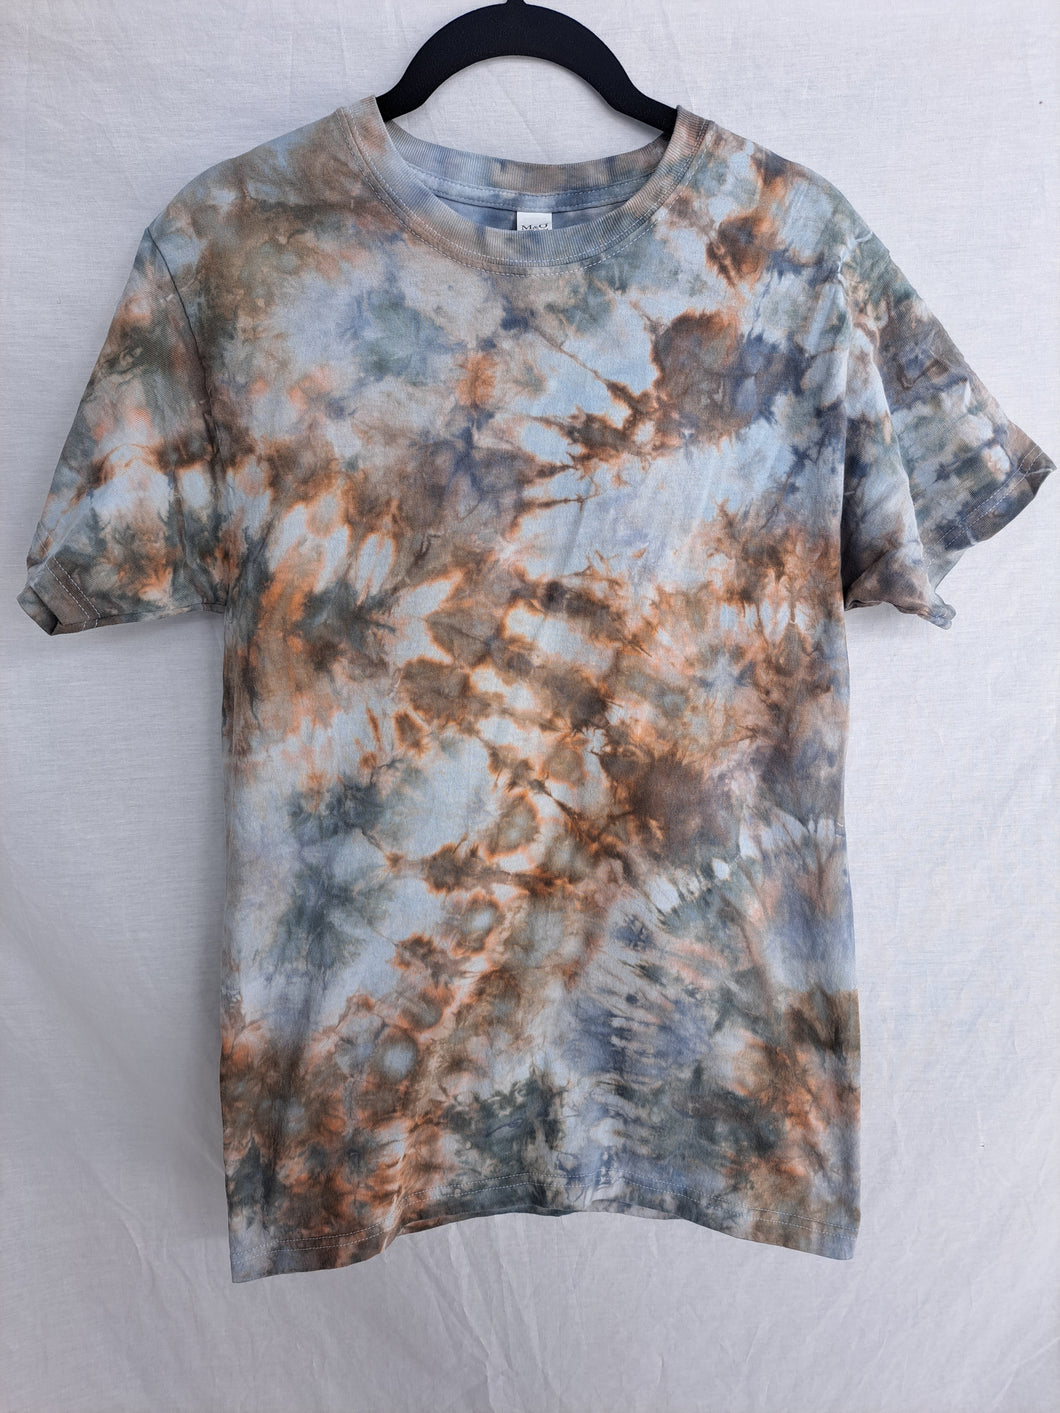 Organic cotton unisex t-shirt, size S